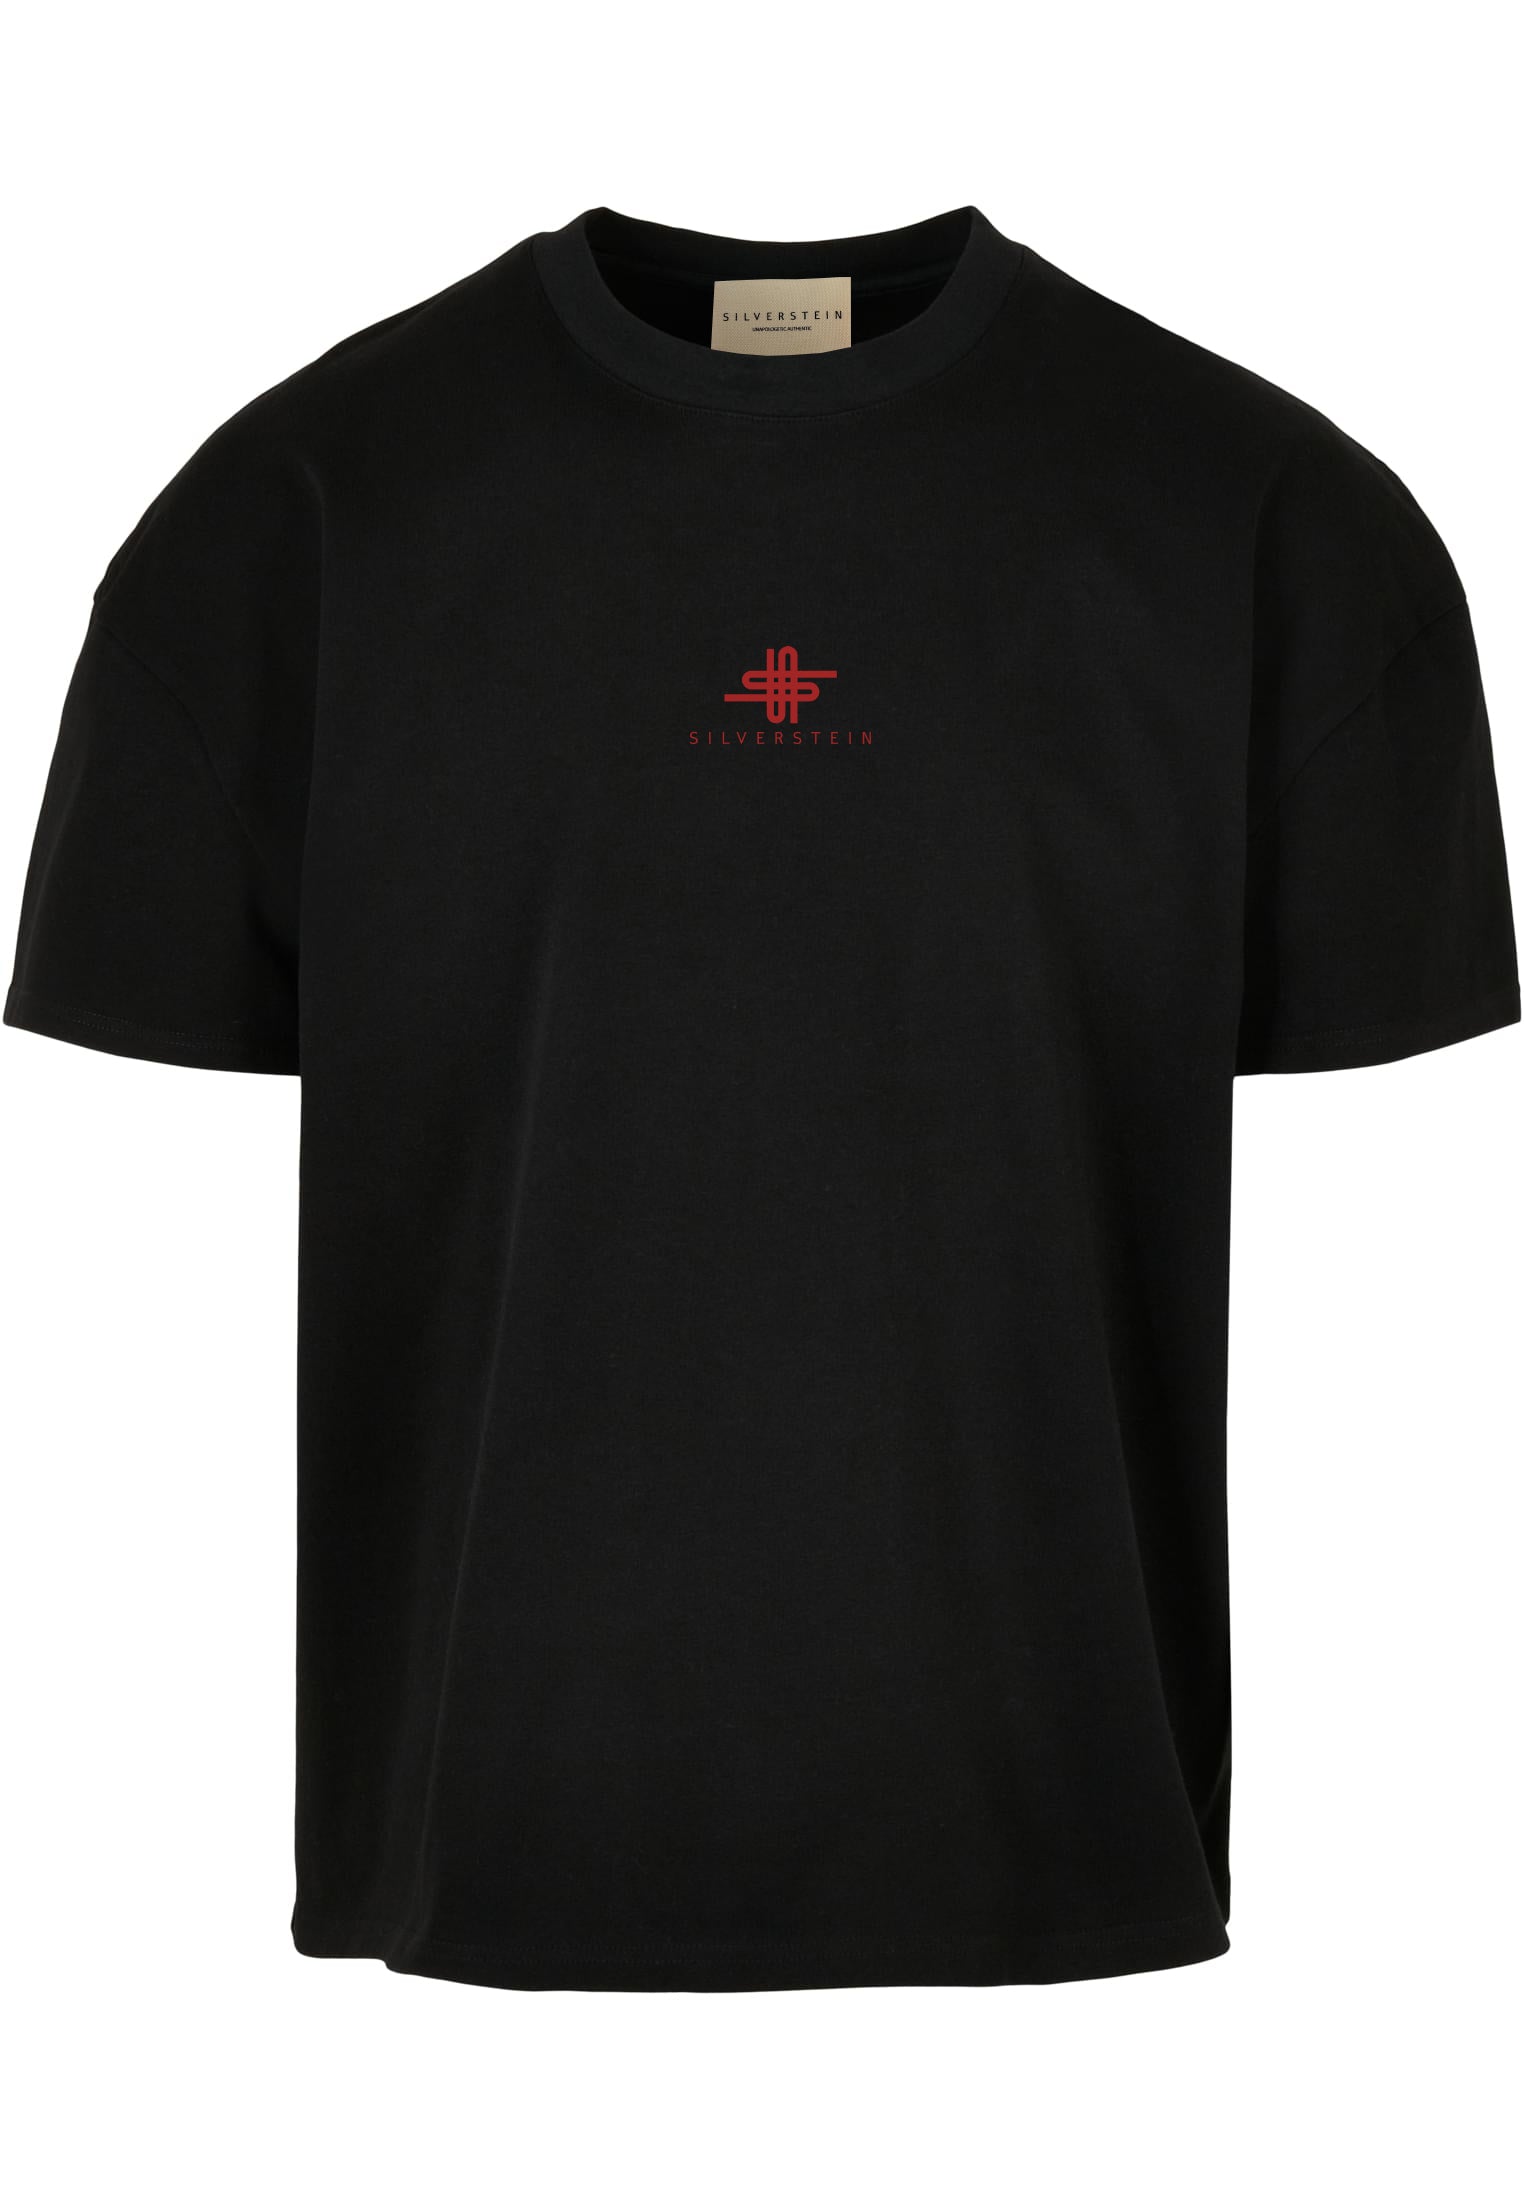 Black "Red LG" Unisex T-Shirt